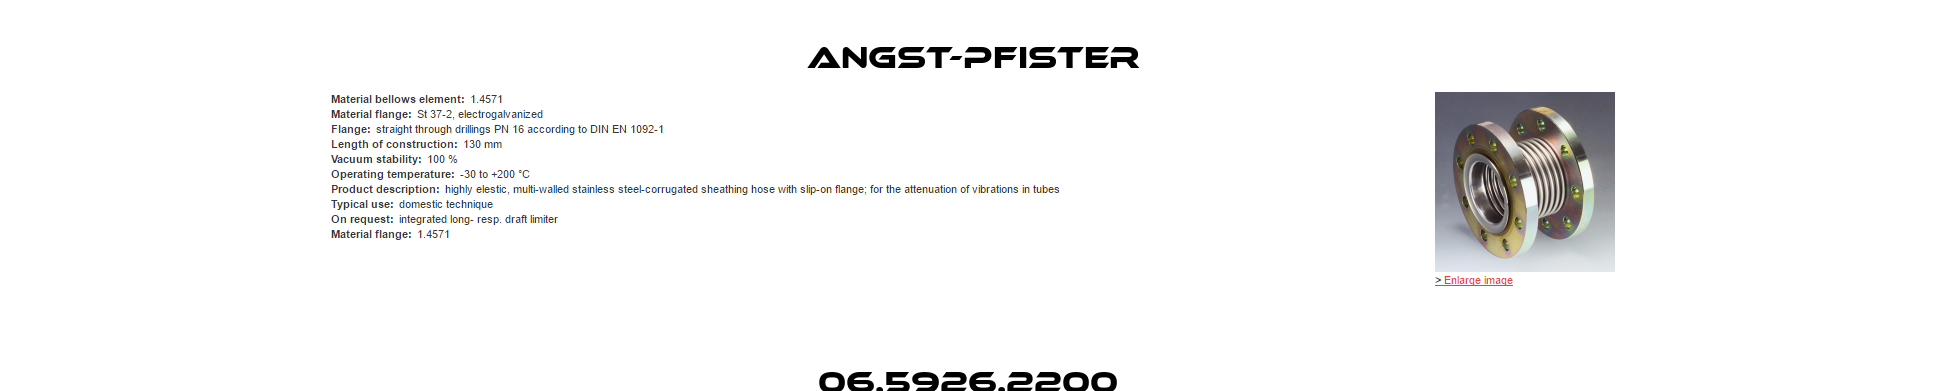 06.5926.2200  Angst-Pfister